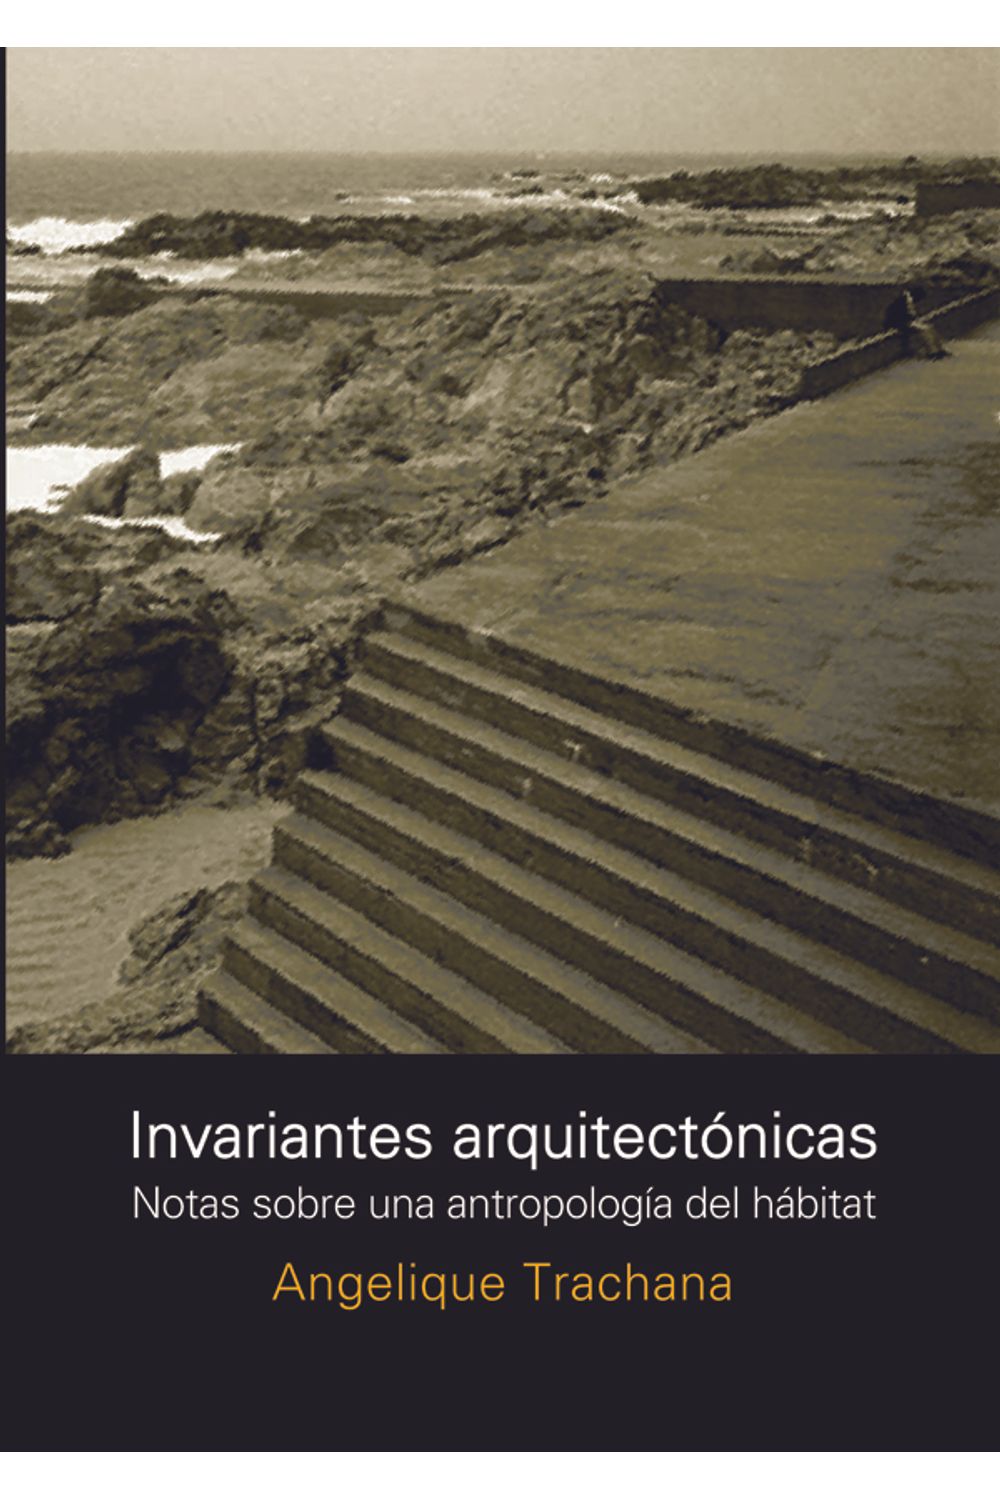 bm-invariantes-arquitectonicas-nobukodiseno-editorial-9789875845305